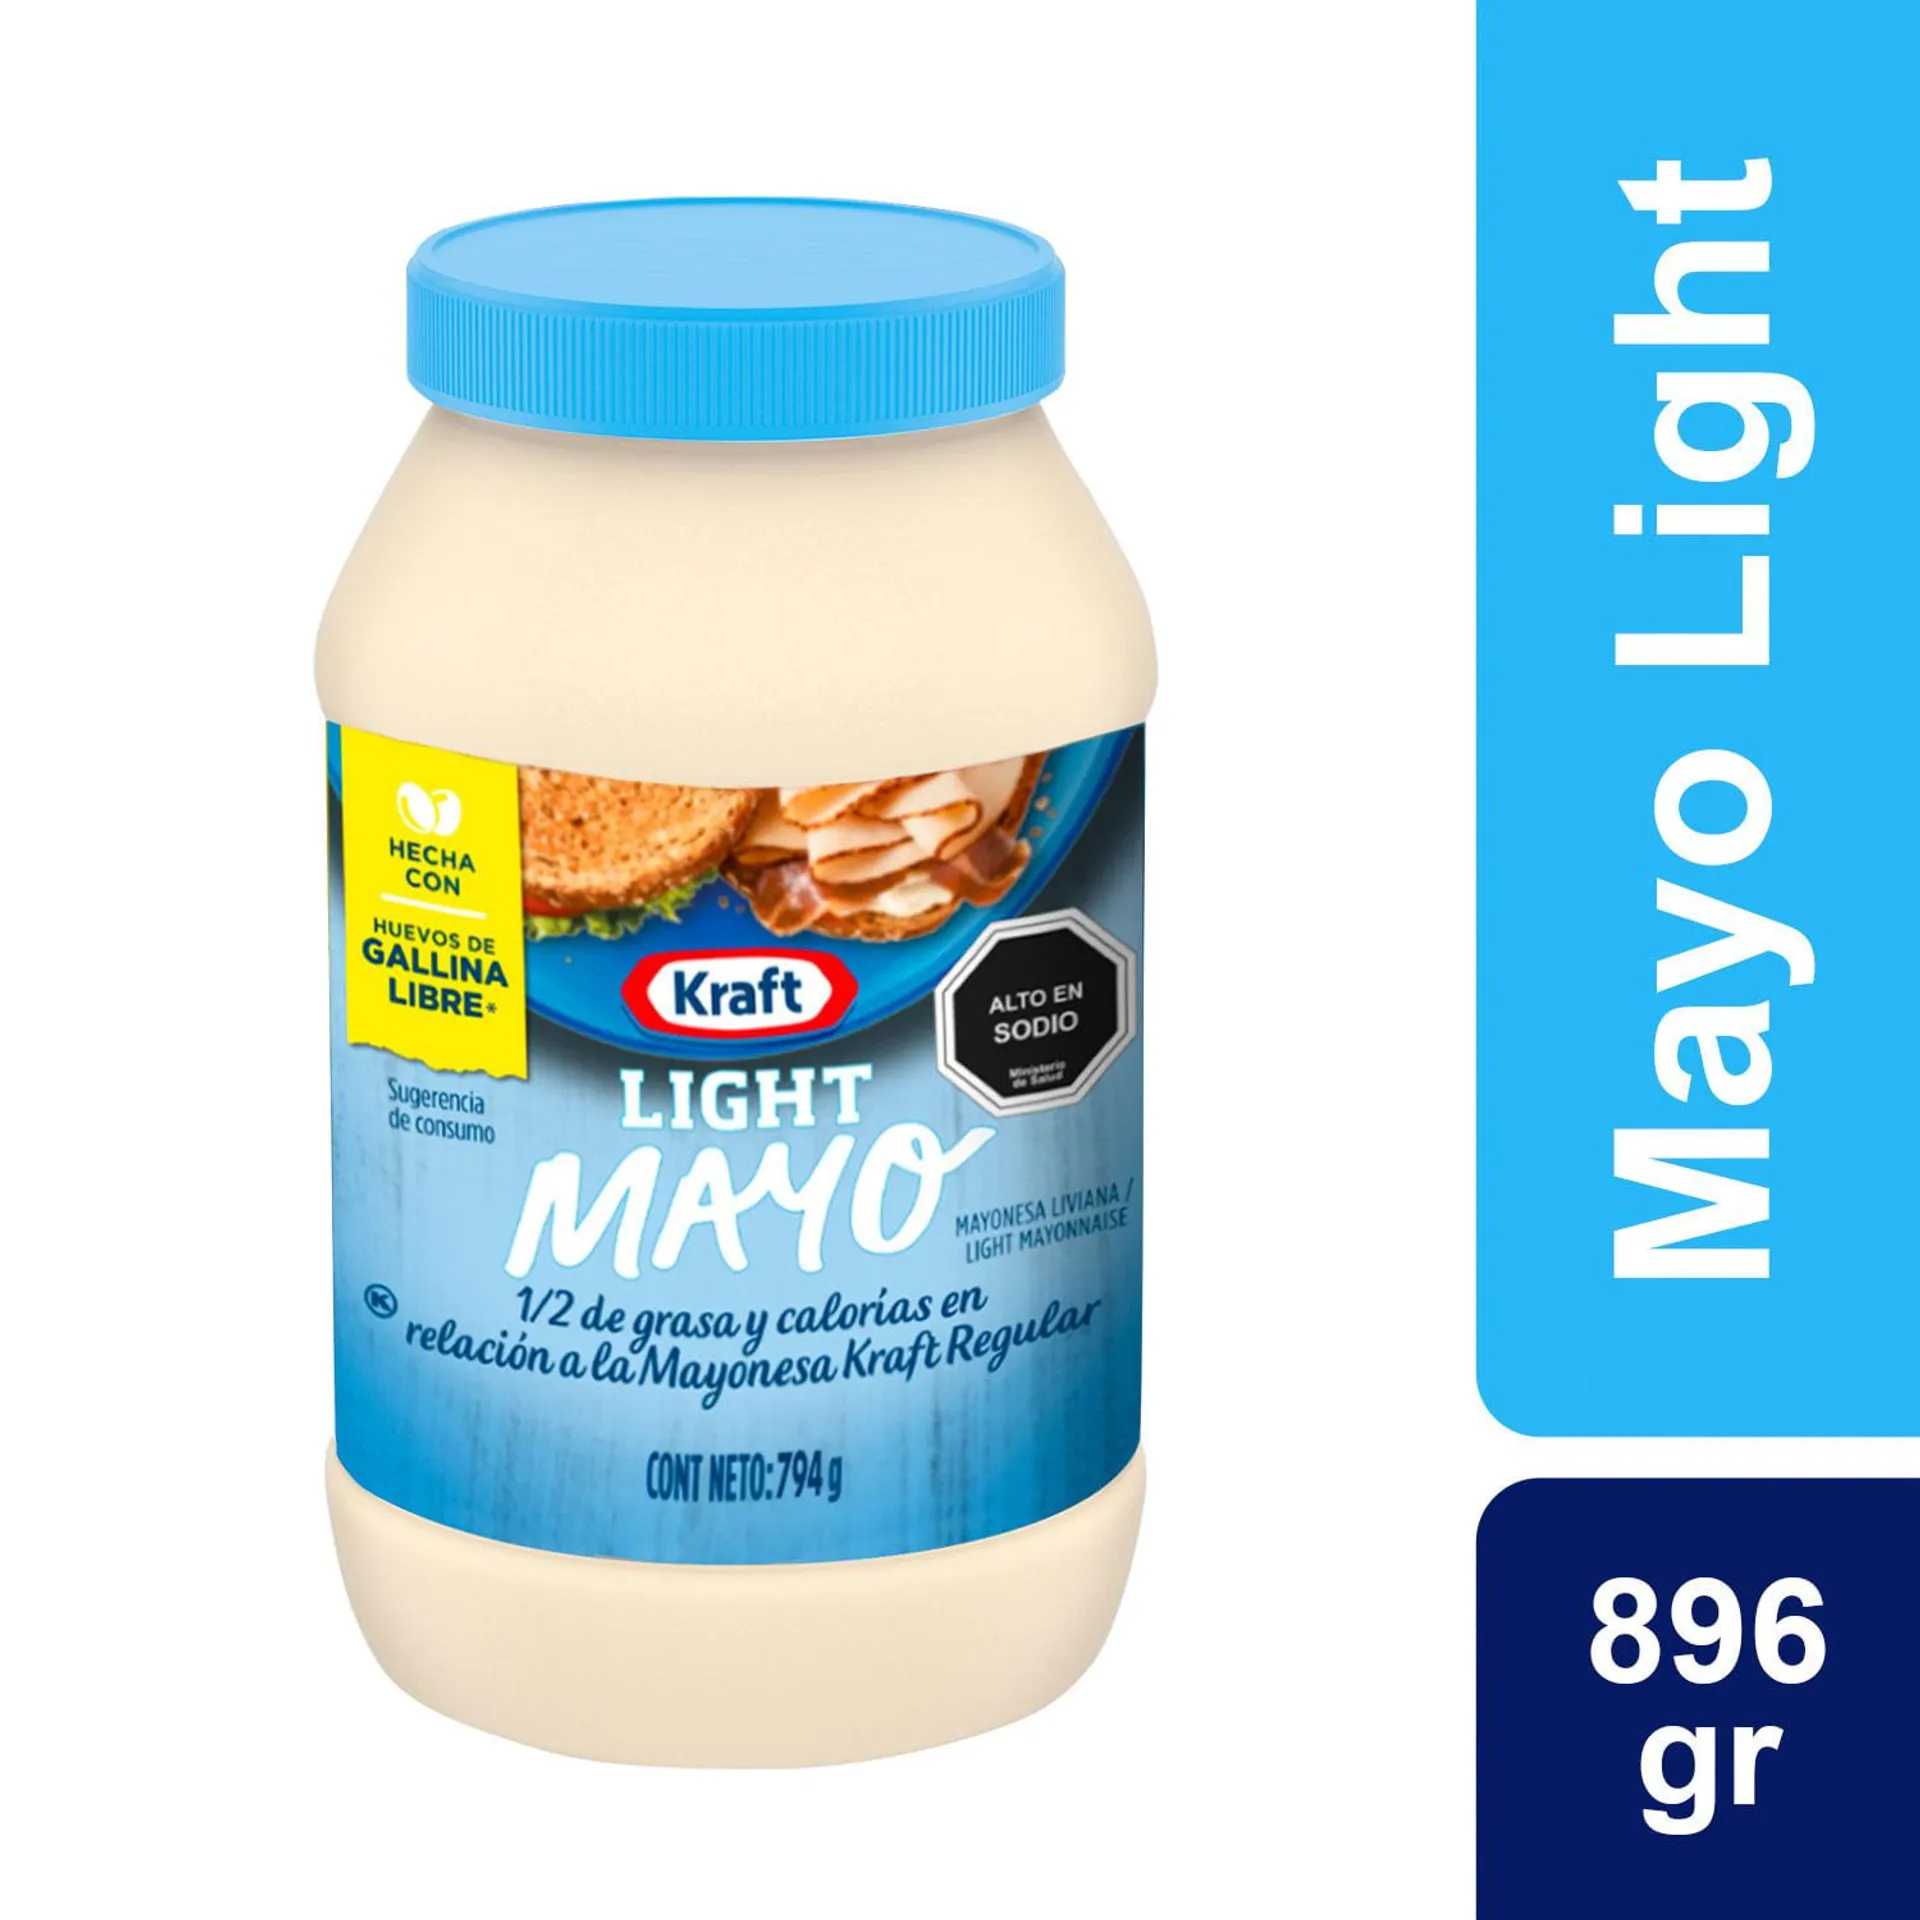 Mayonesa light 896 g